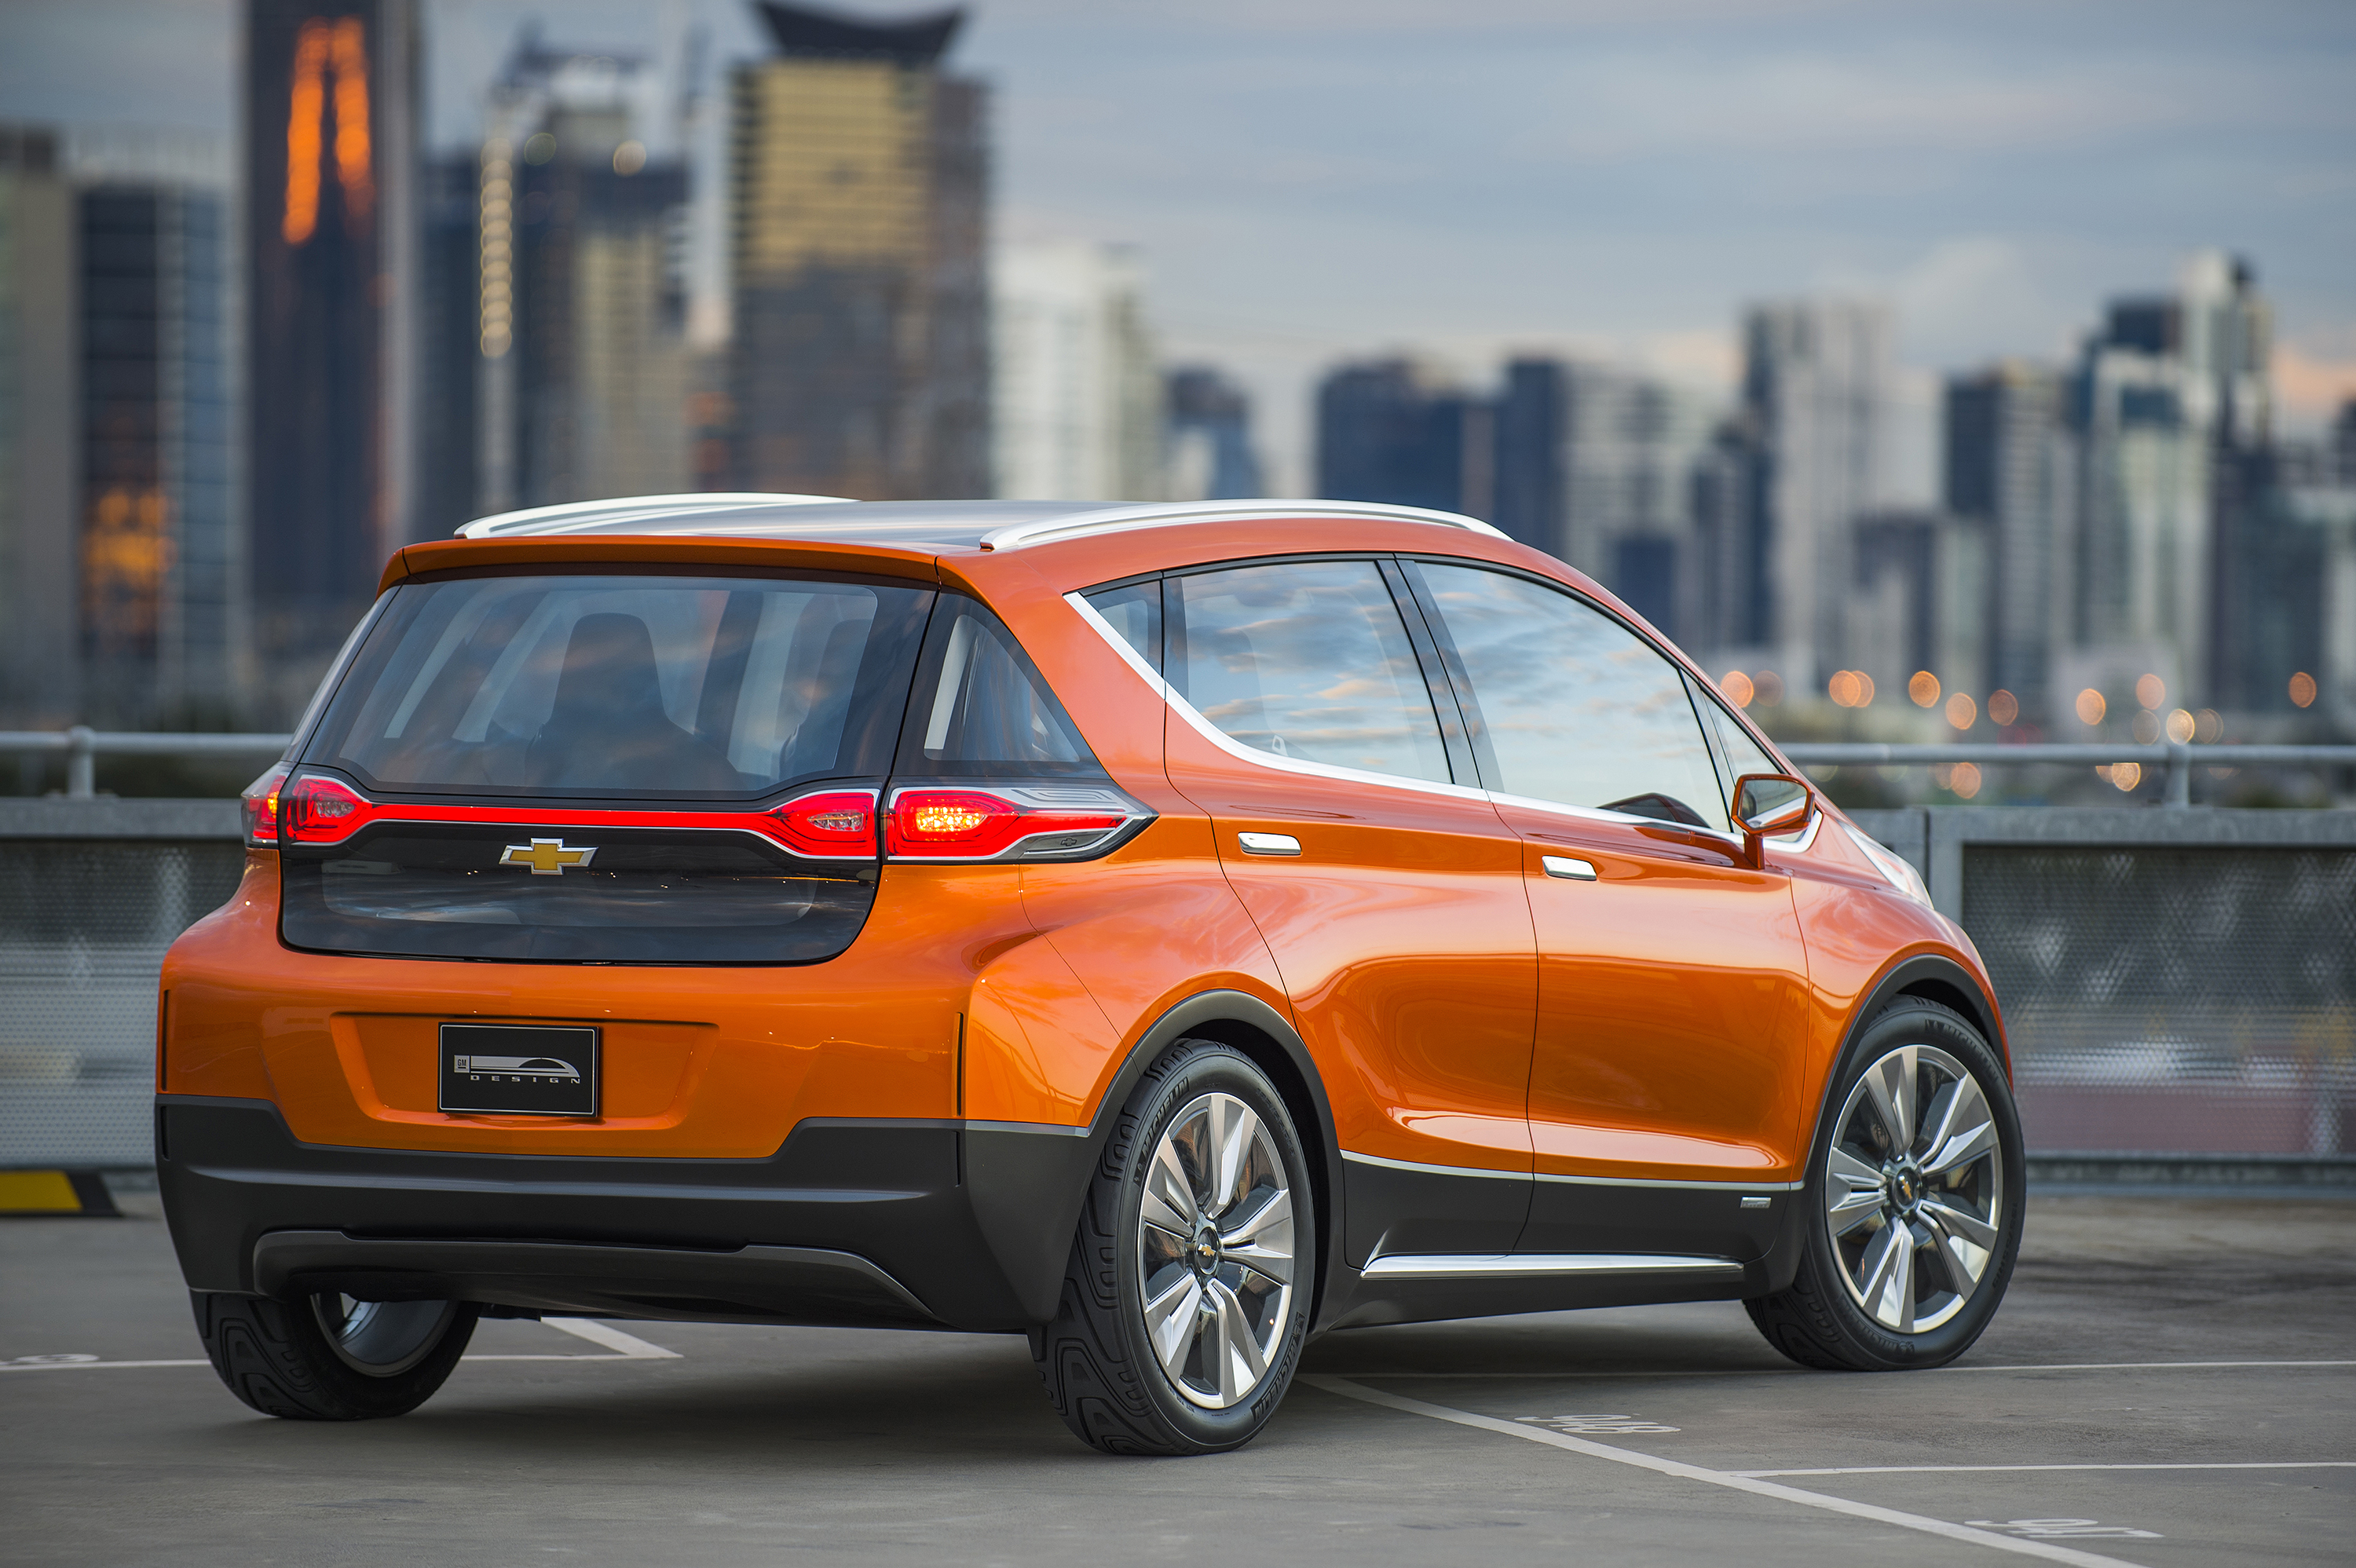 2016 Chevrolet Bolt Electric Vehicle rear profile`